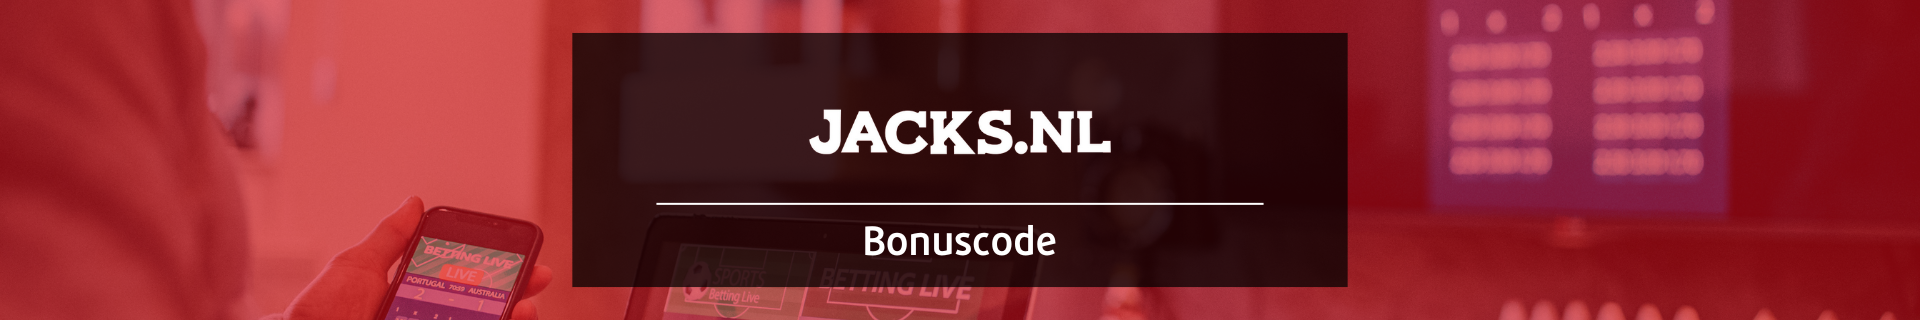 Jacks.nl bonus code